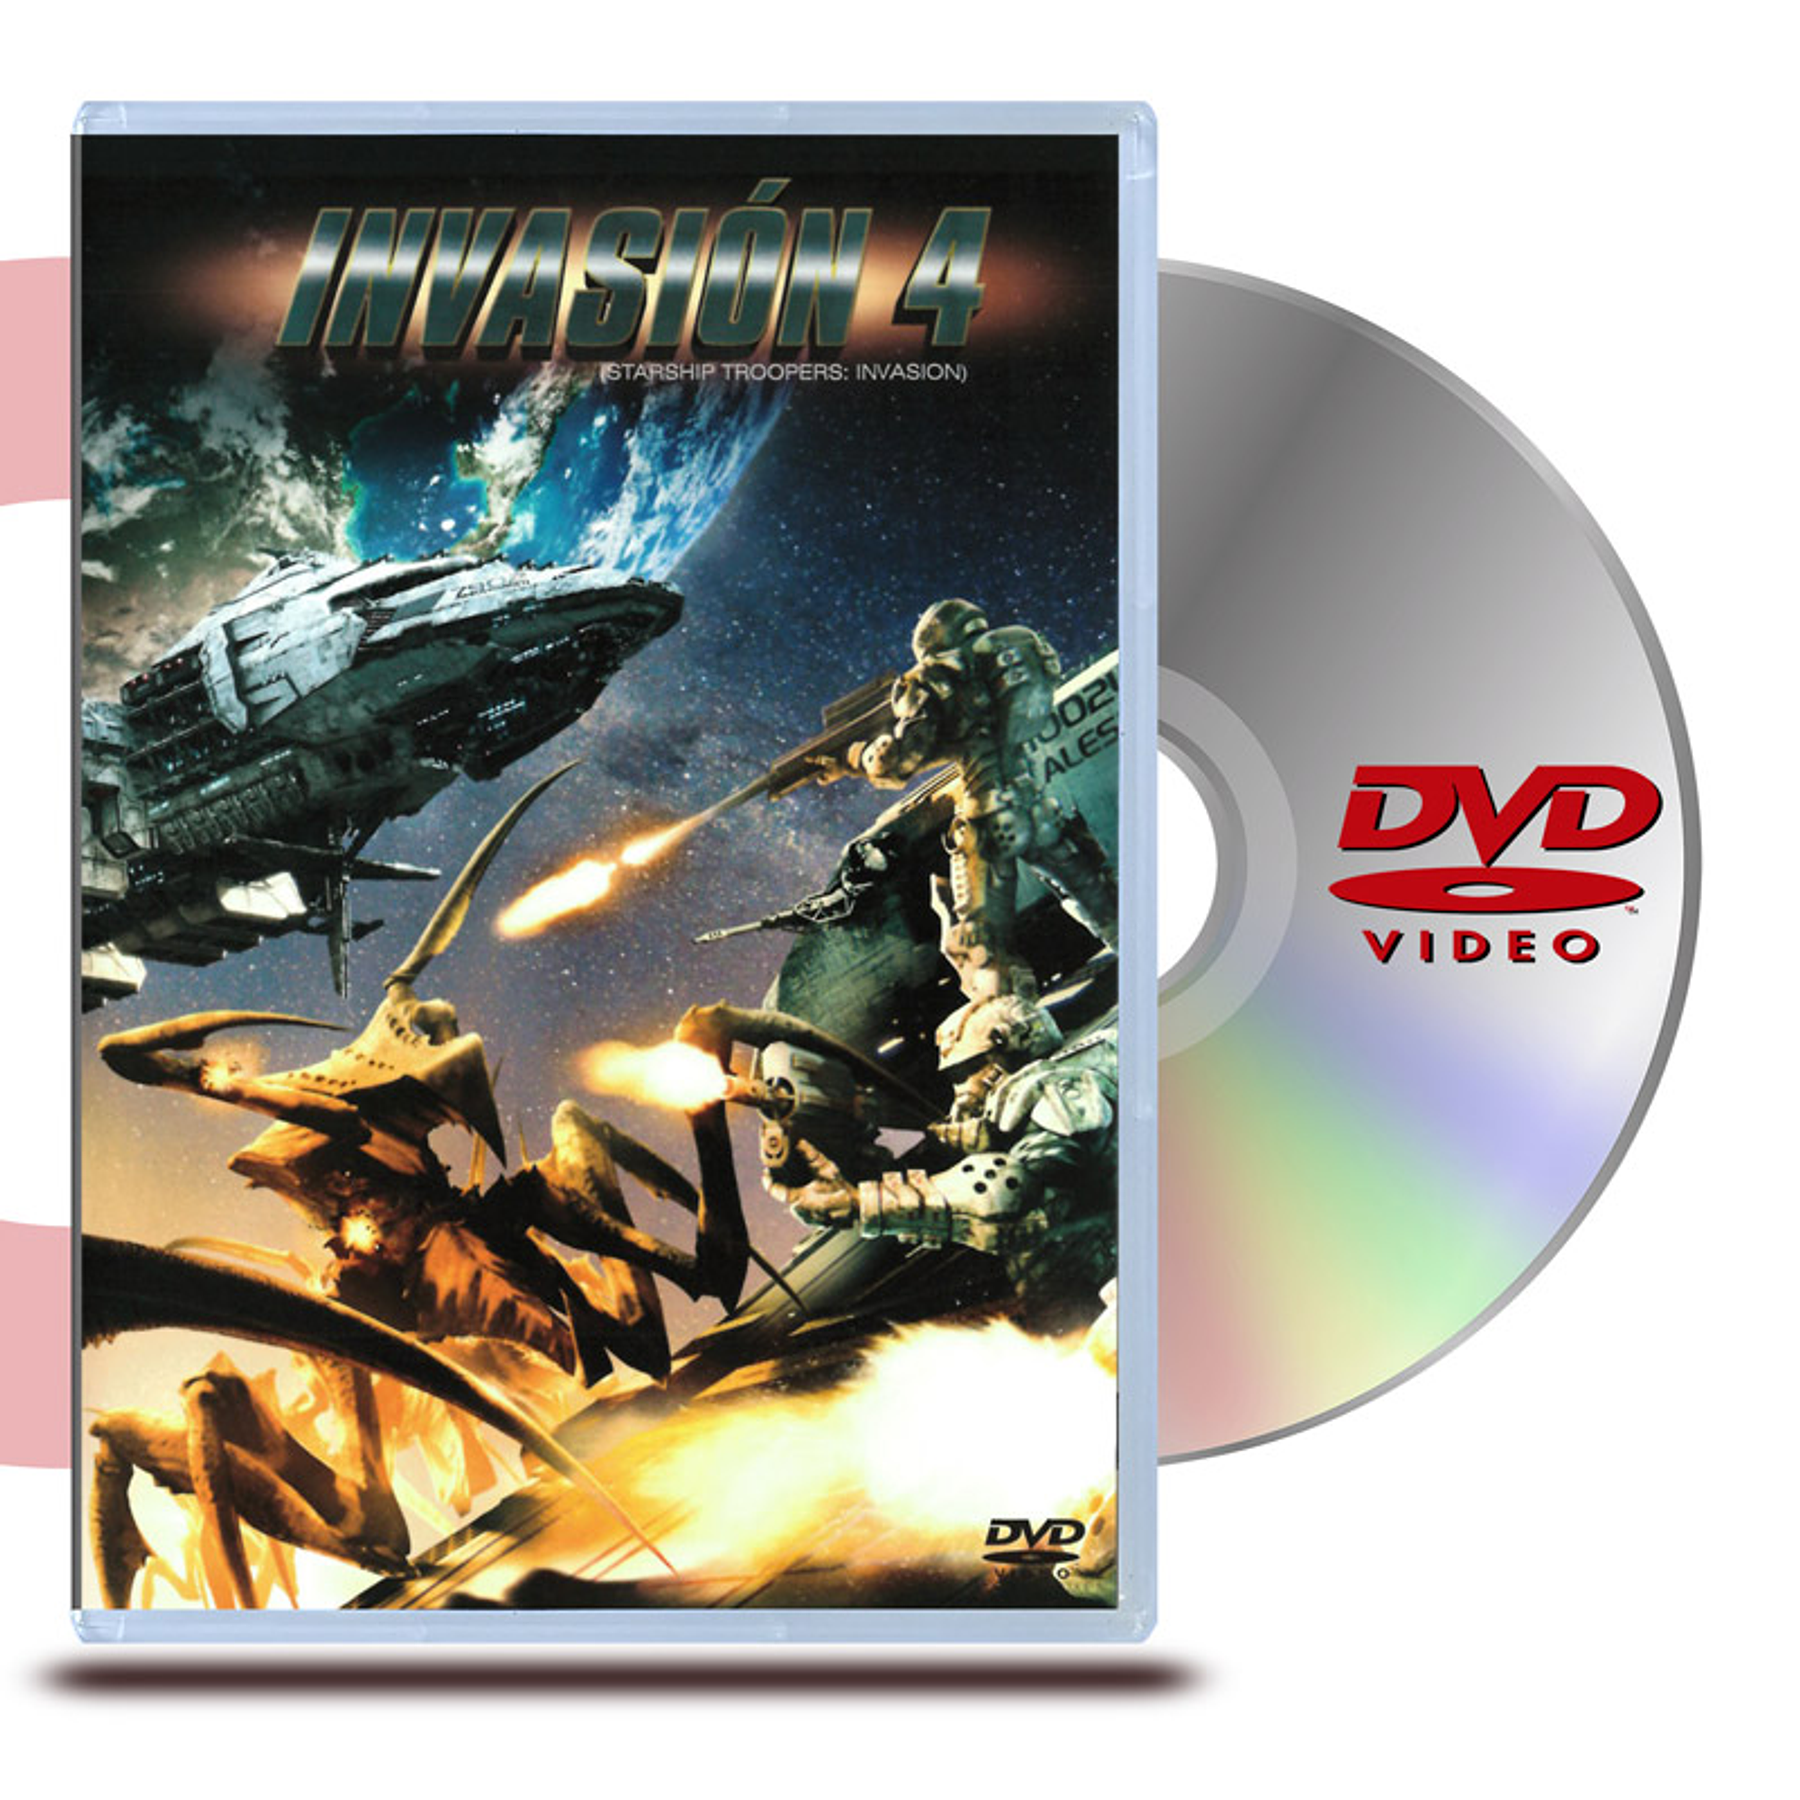 DVD INVASIÓN 4